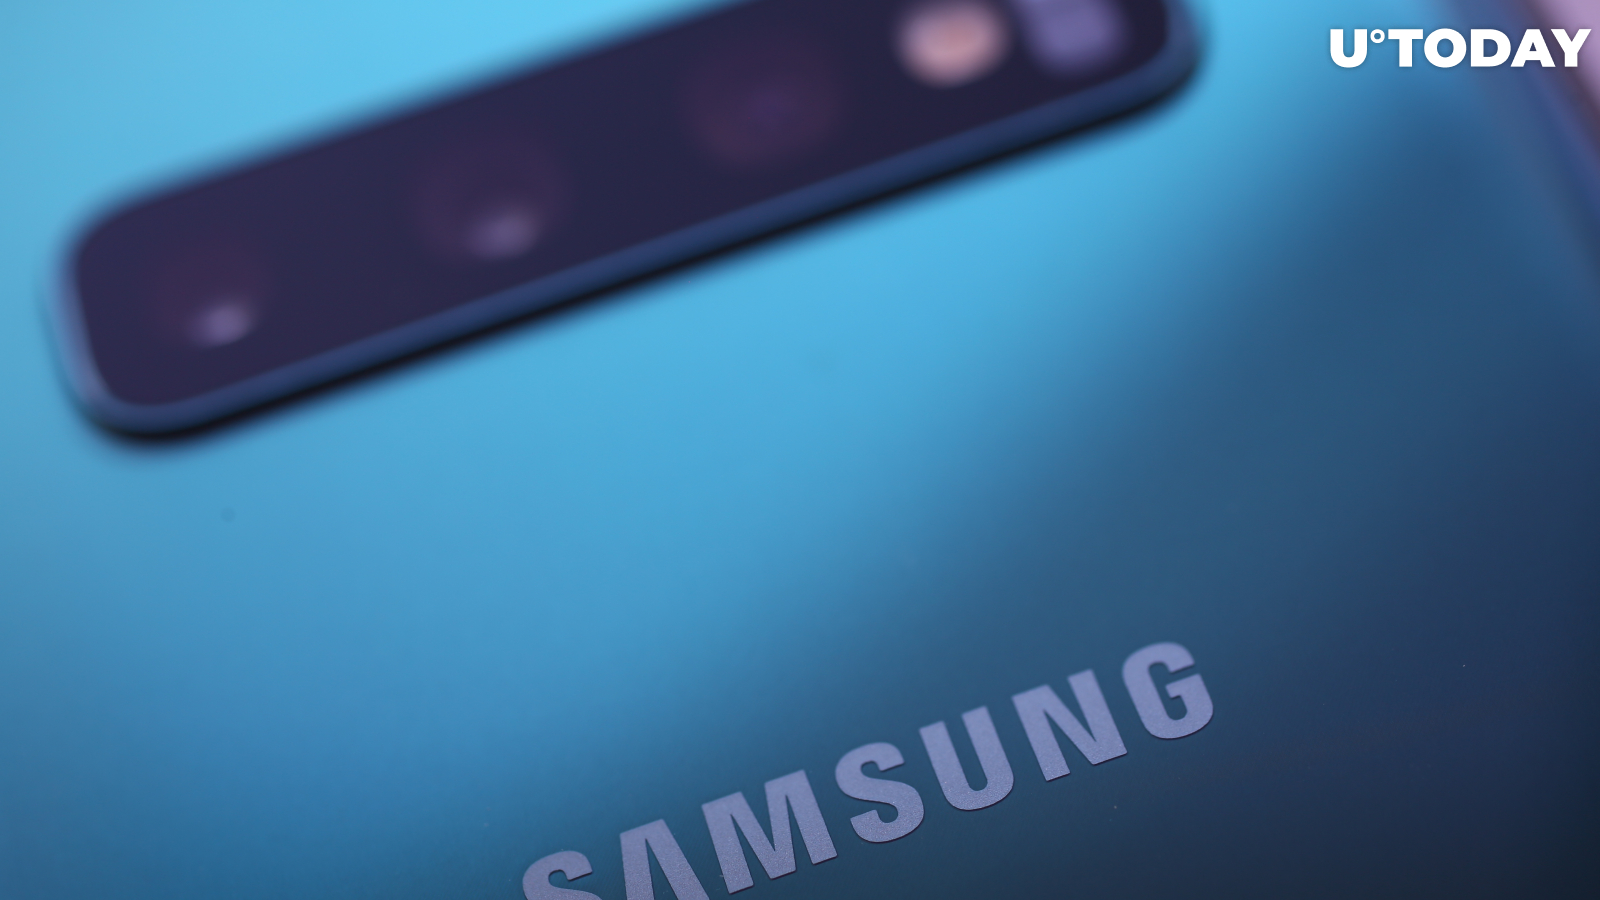 JUST IN: Stellar (XLM) Now Available on Samsung Galaxy Phones via Blockchain Keystore